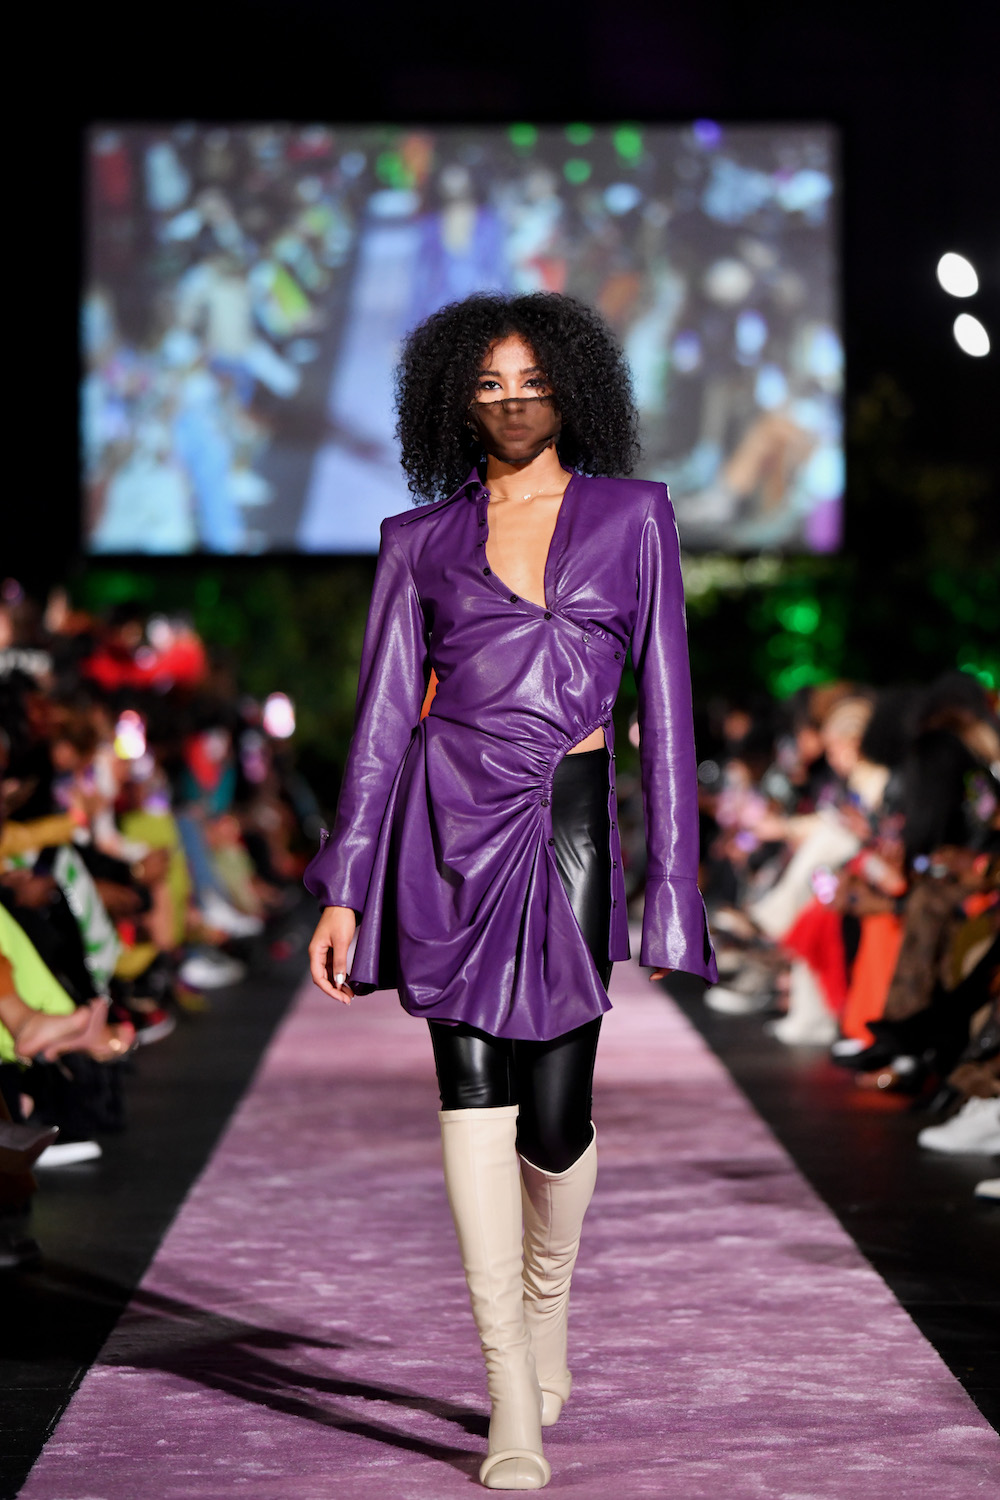 Anifa Mvuemba, a New Face of Fashion